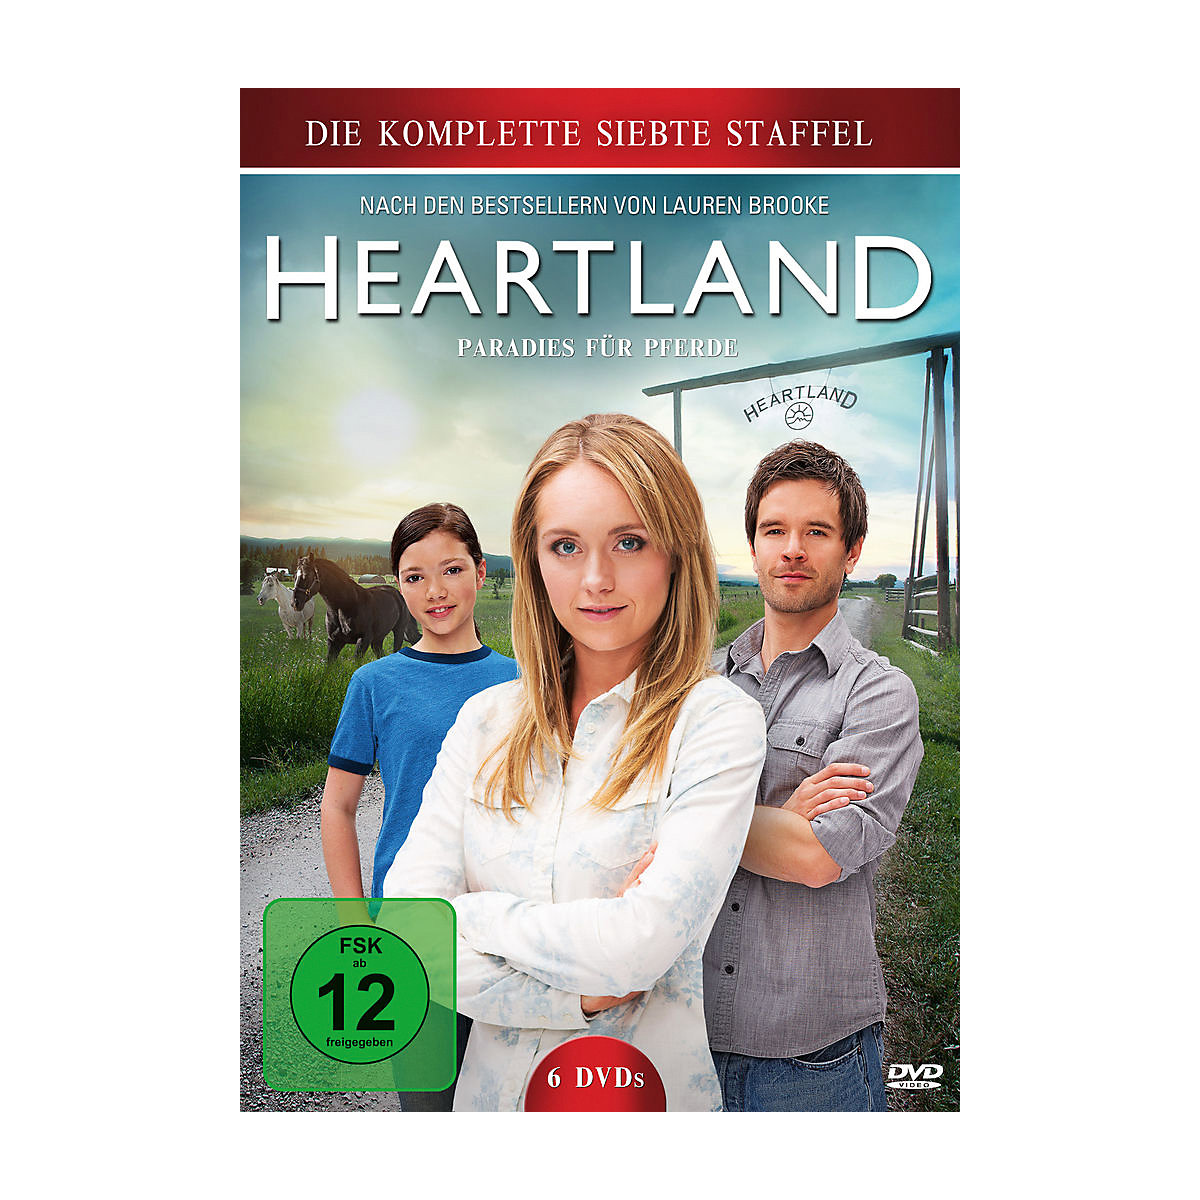 DVD Heartland Paradies für Pferde Season 7